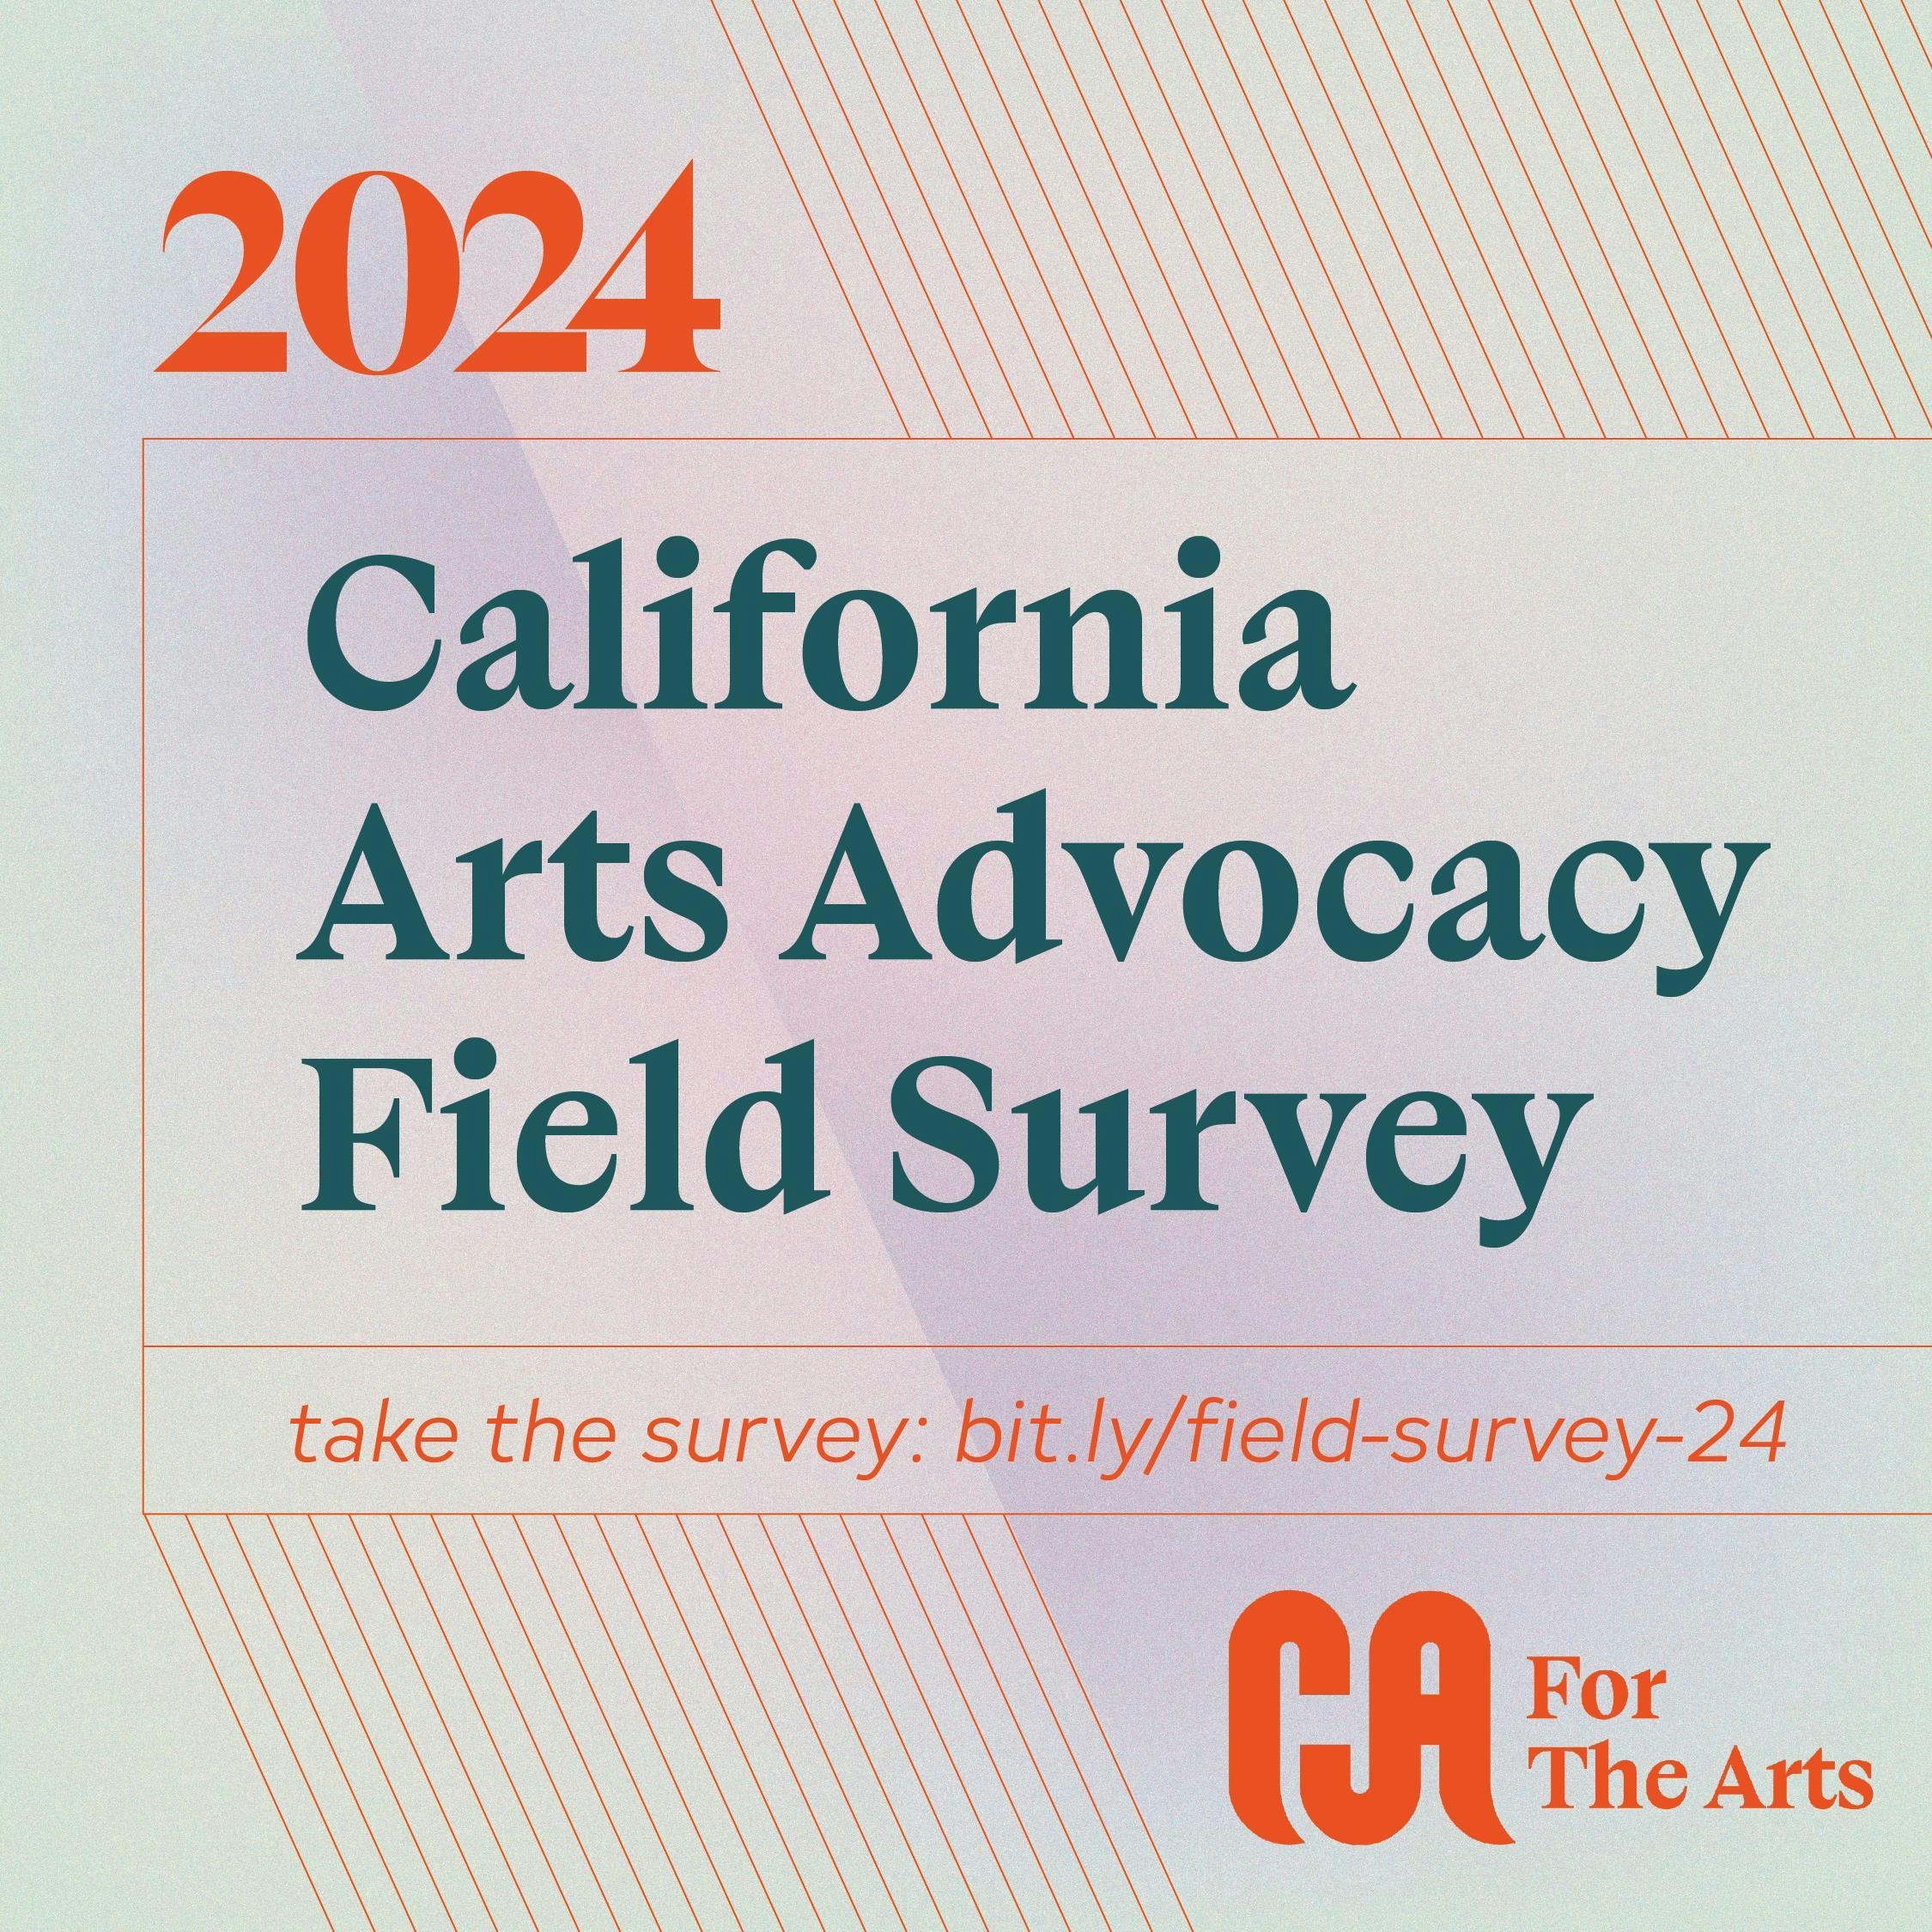 Graphic: 2024 California Arts Advocacy Field Survey, take the survey: bit.ly/field-survey-24